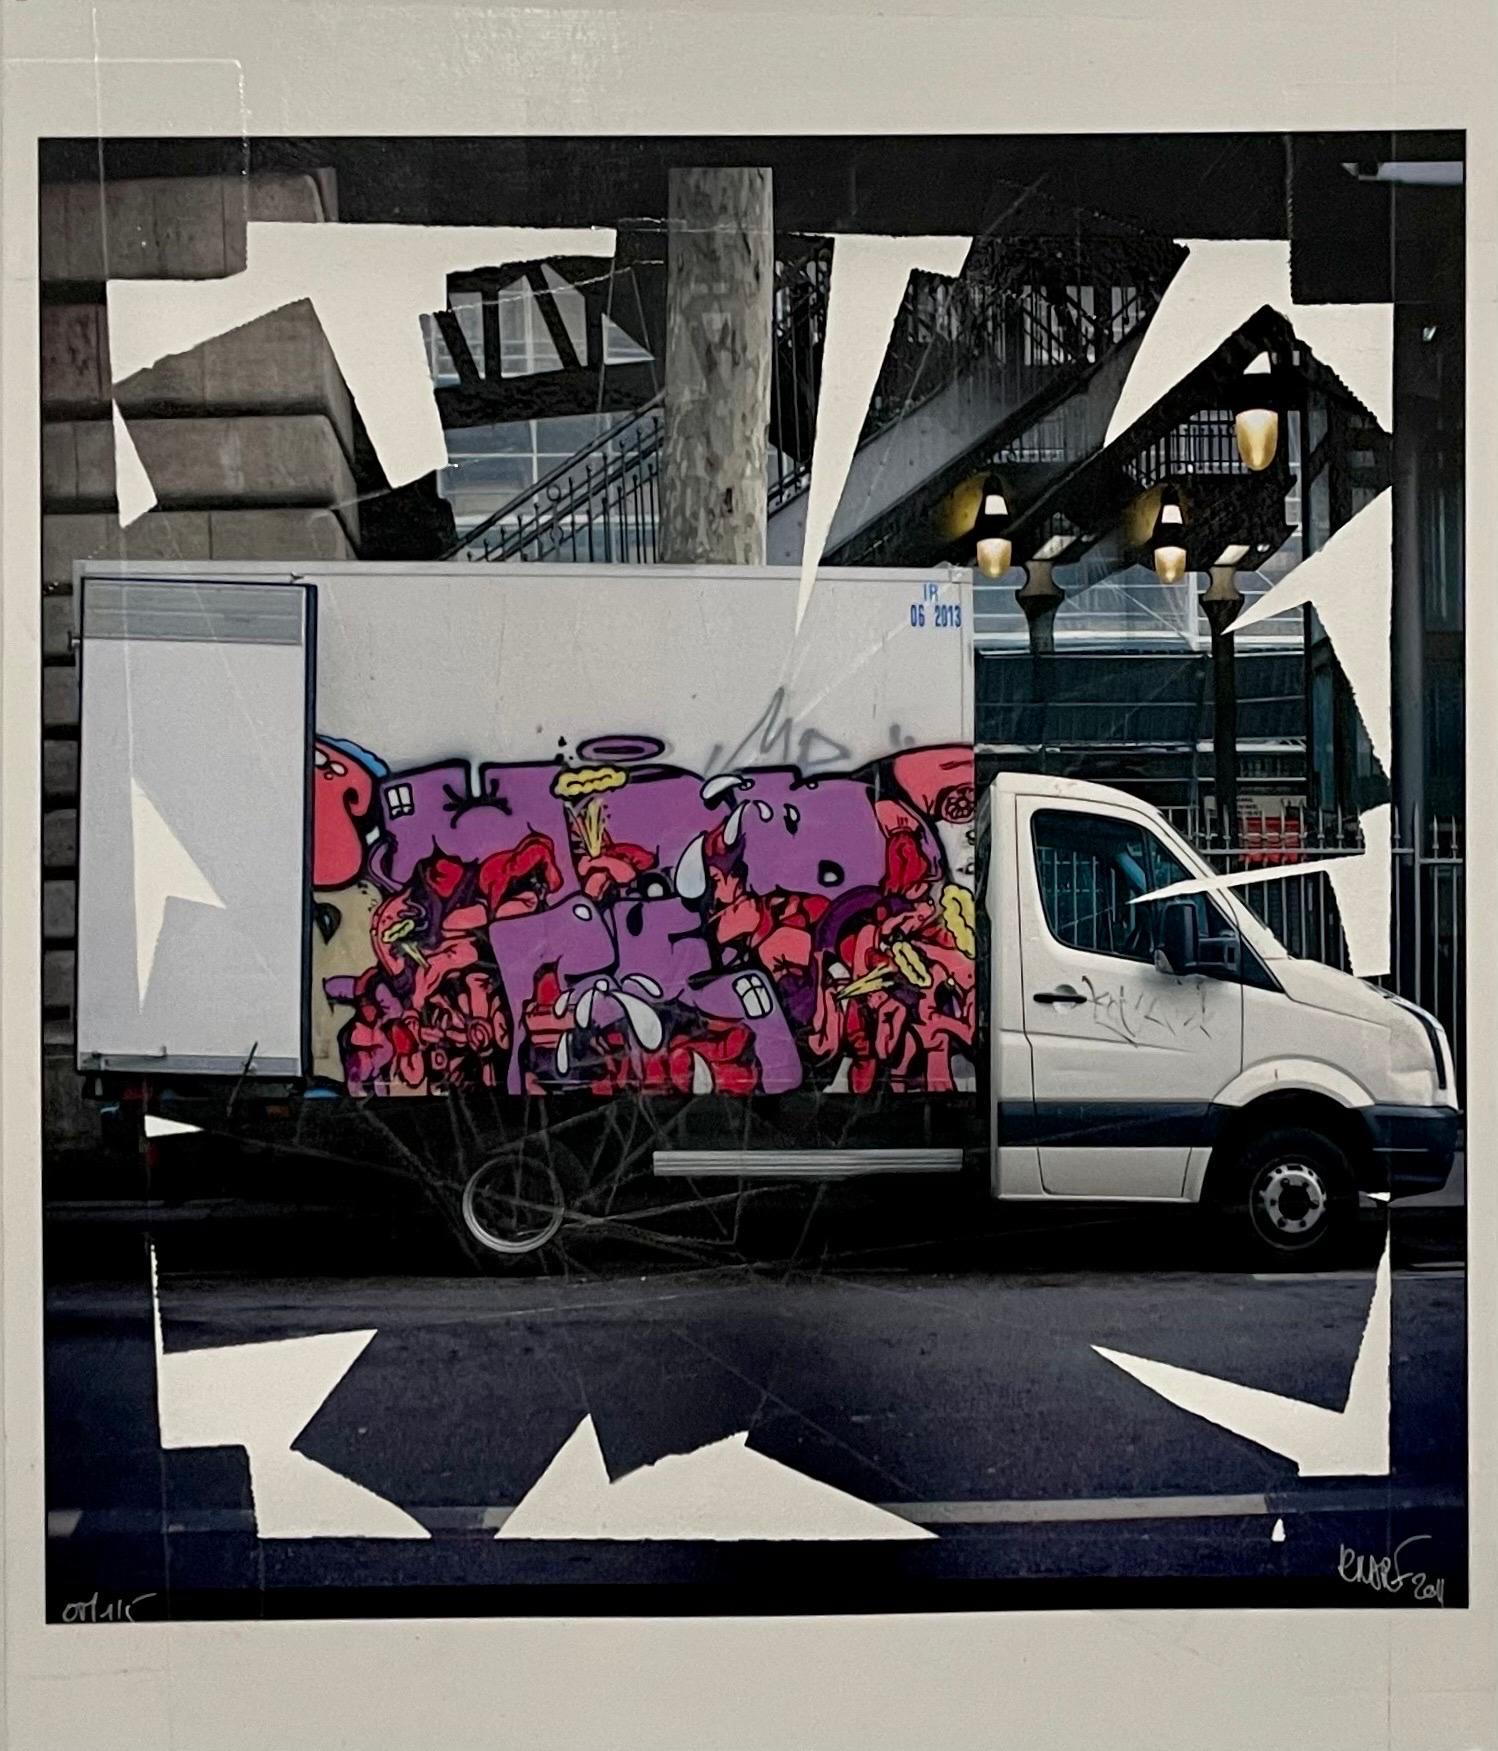 K-Narf Color Photo Graffiti, Adhesive Tape Altered Street Art Photograph Collage